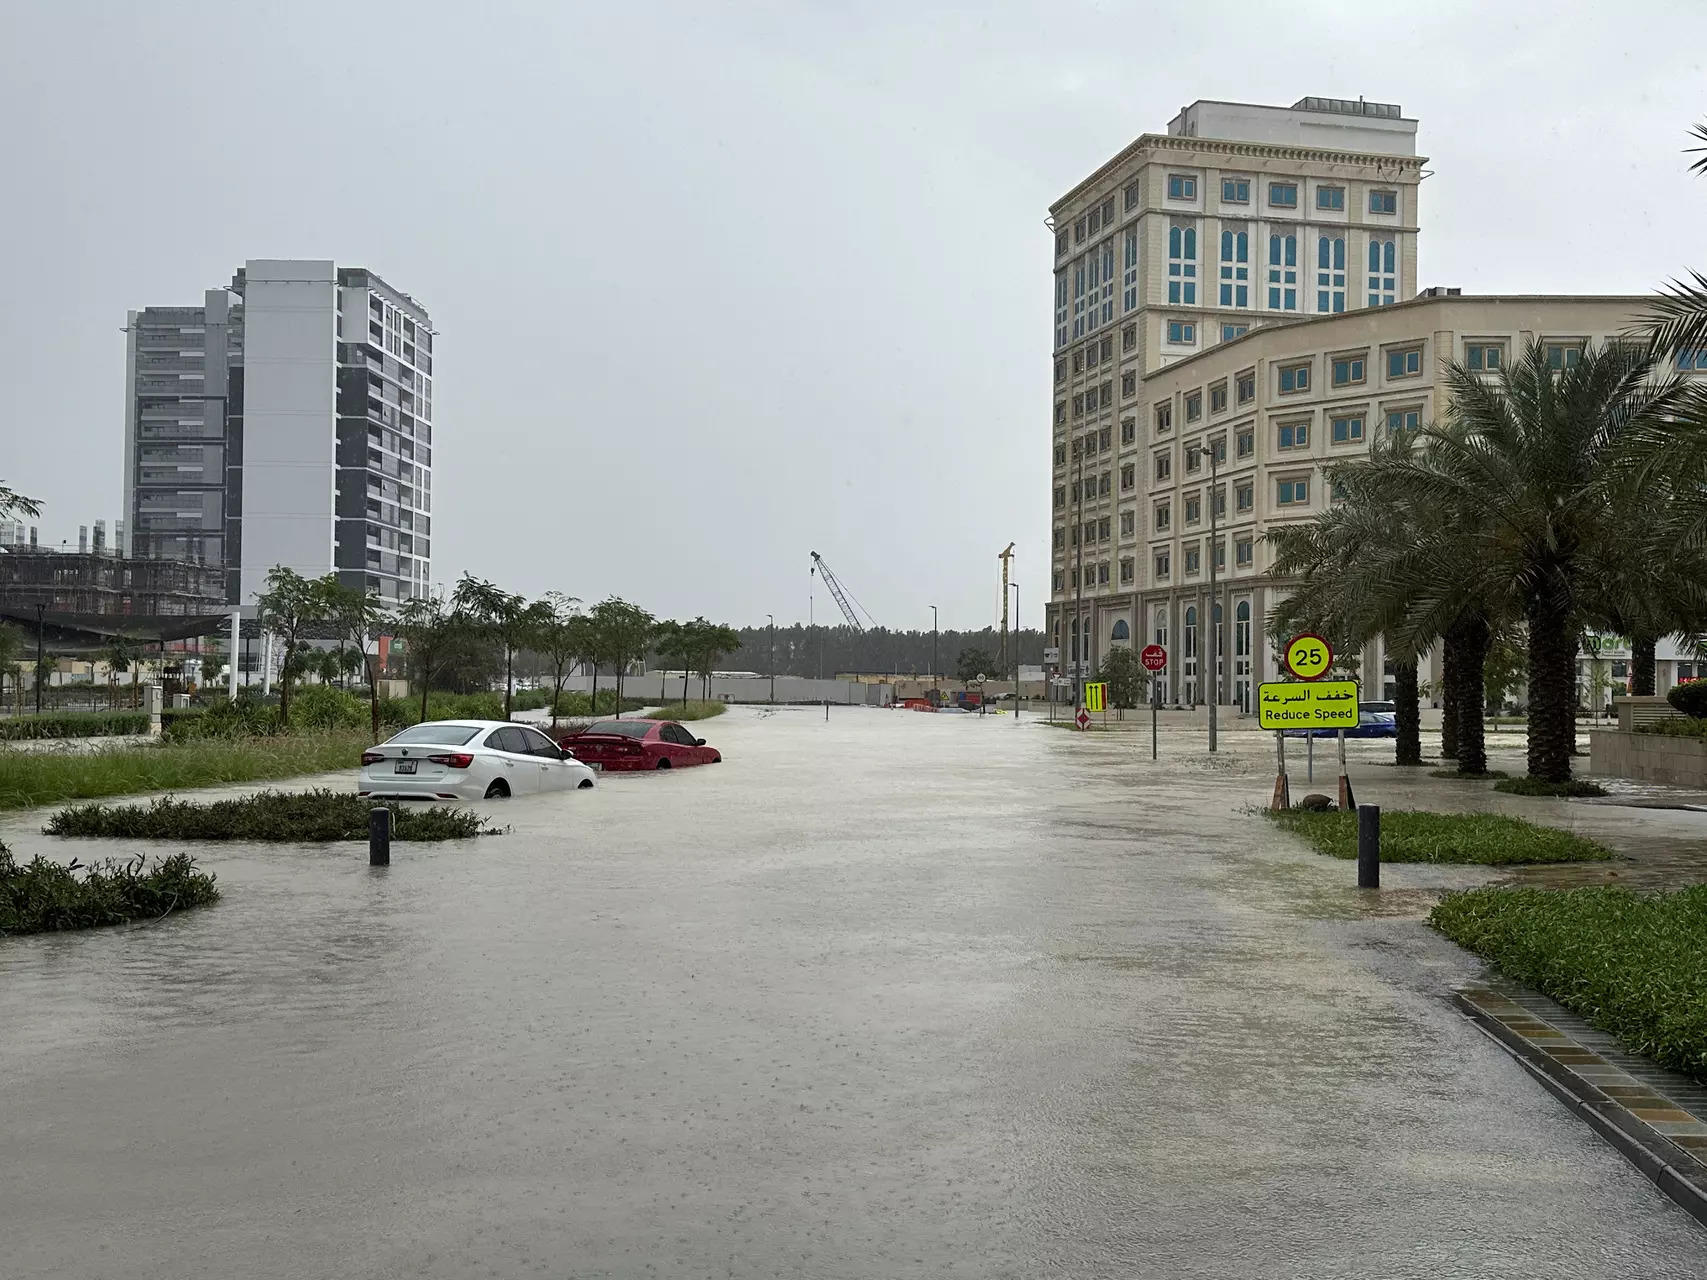 Dubai rain bomb: UAE govt denies cloud seeding. Then what caused the floods? 